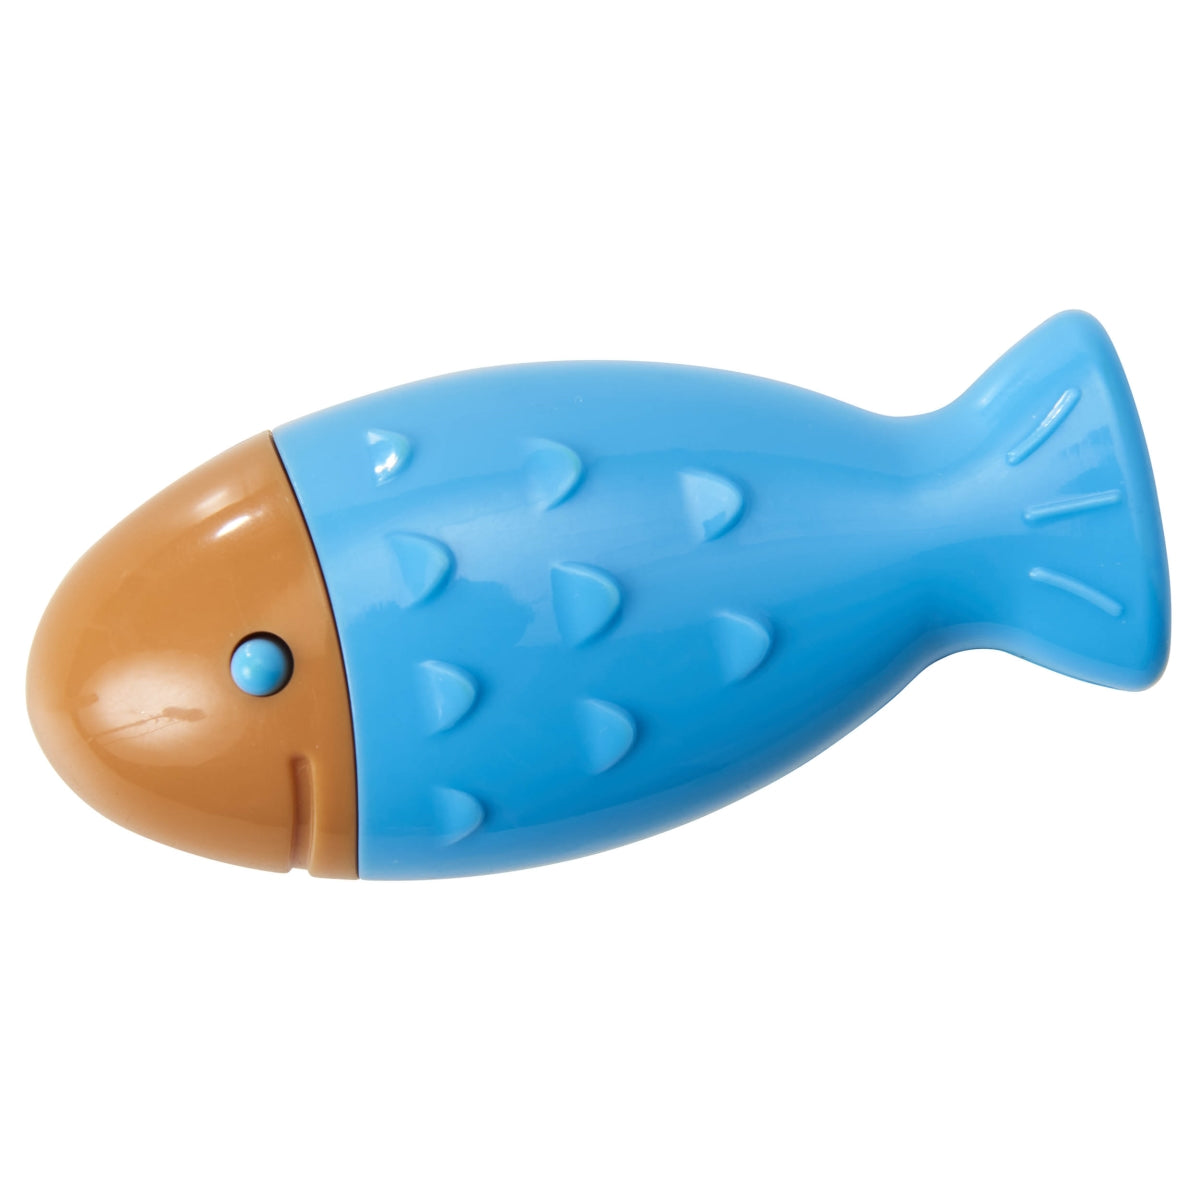 Spot Finley Fish Laser Pointer Toy